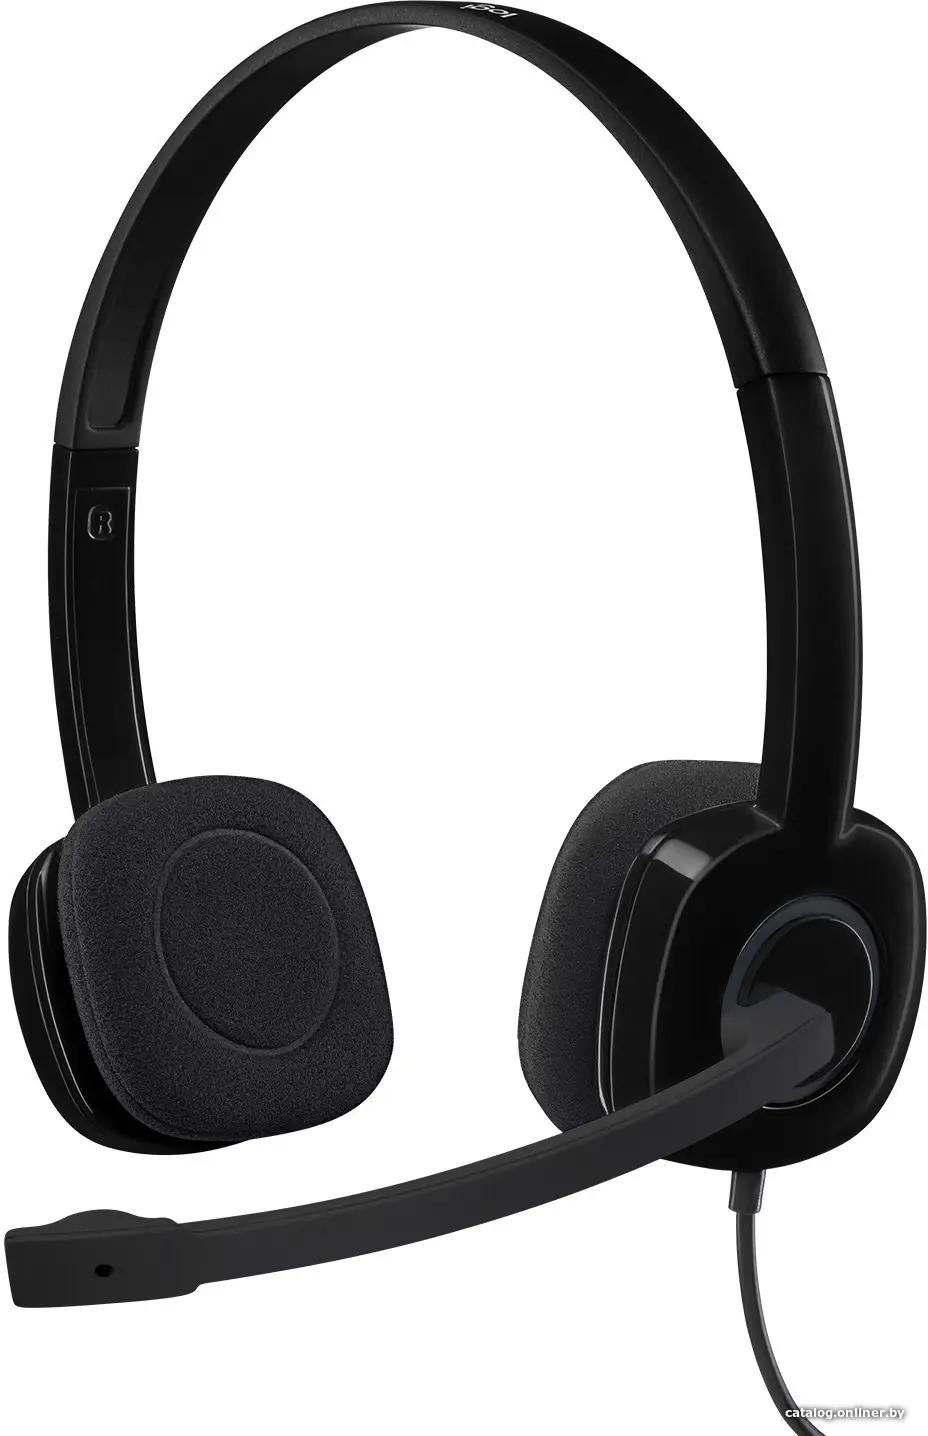 Купить Наушники Logitech Stereo Headset H151 [981-000589], цена, опт и розница